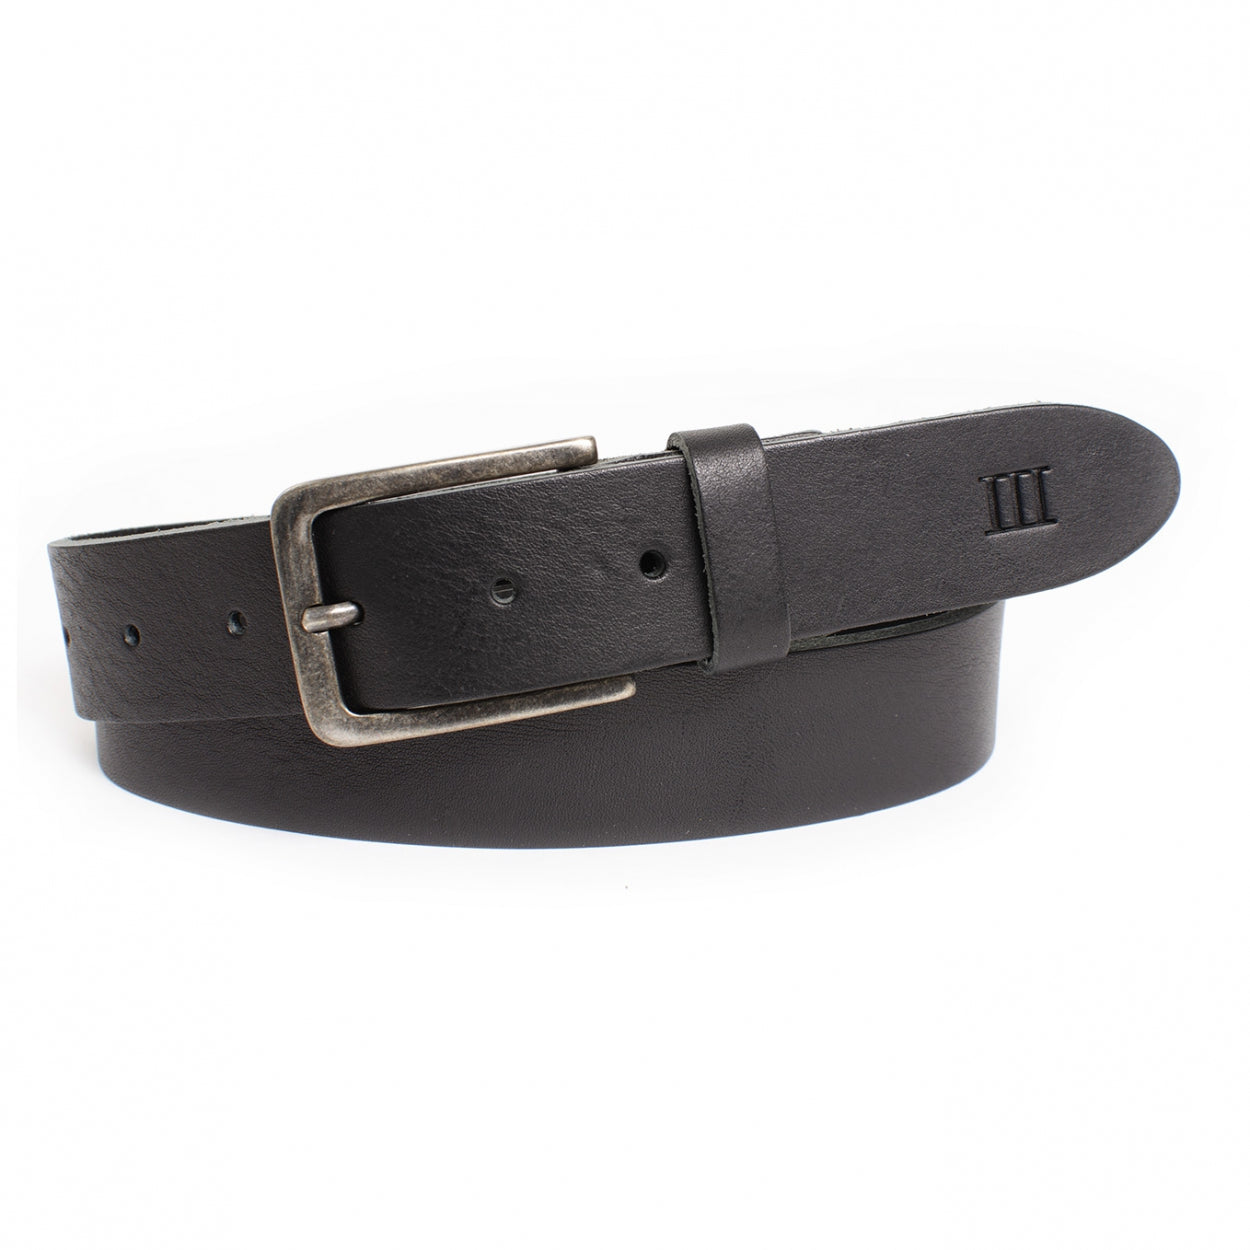 Tresanti EBBY Italian Made Black Leather Belt available at StylishGuy Menswear Dublin